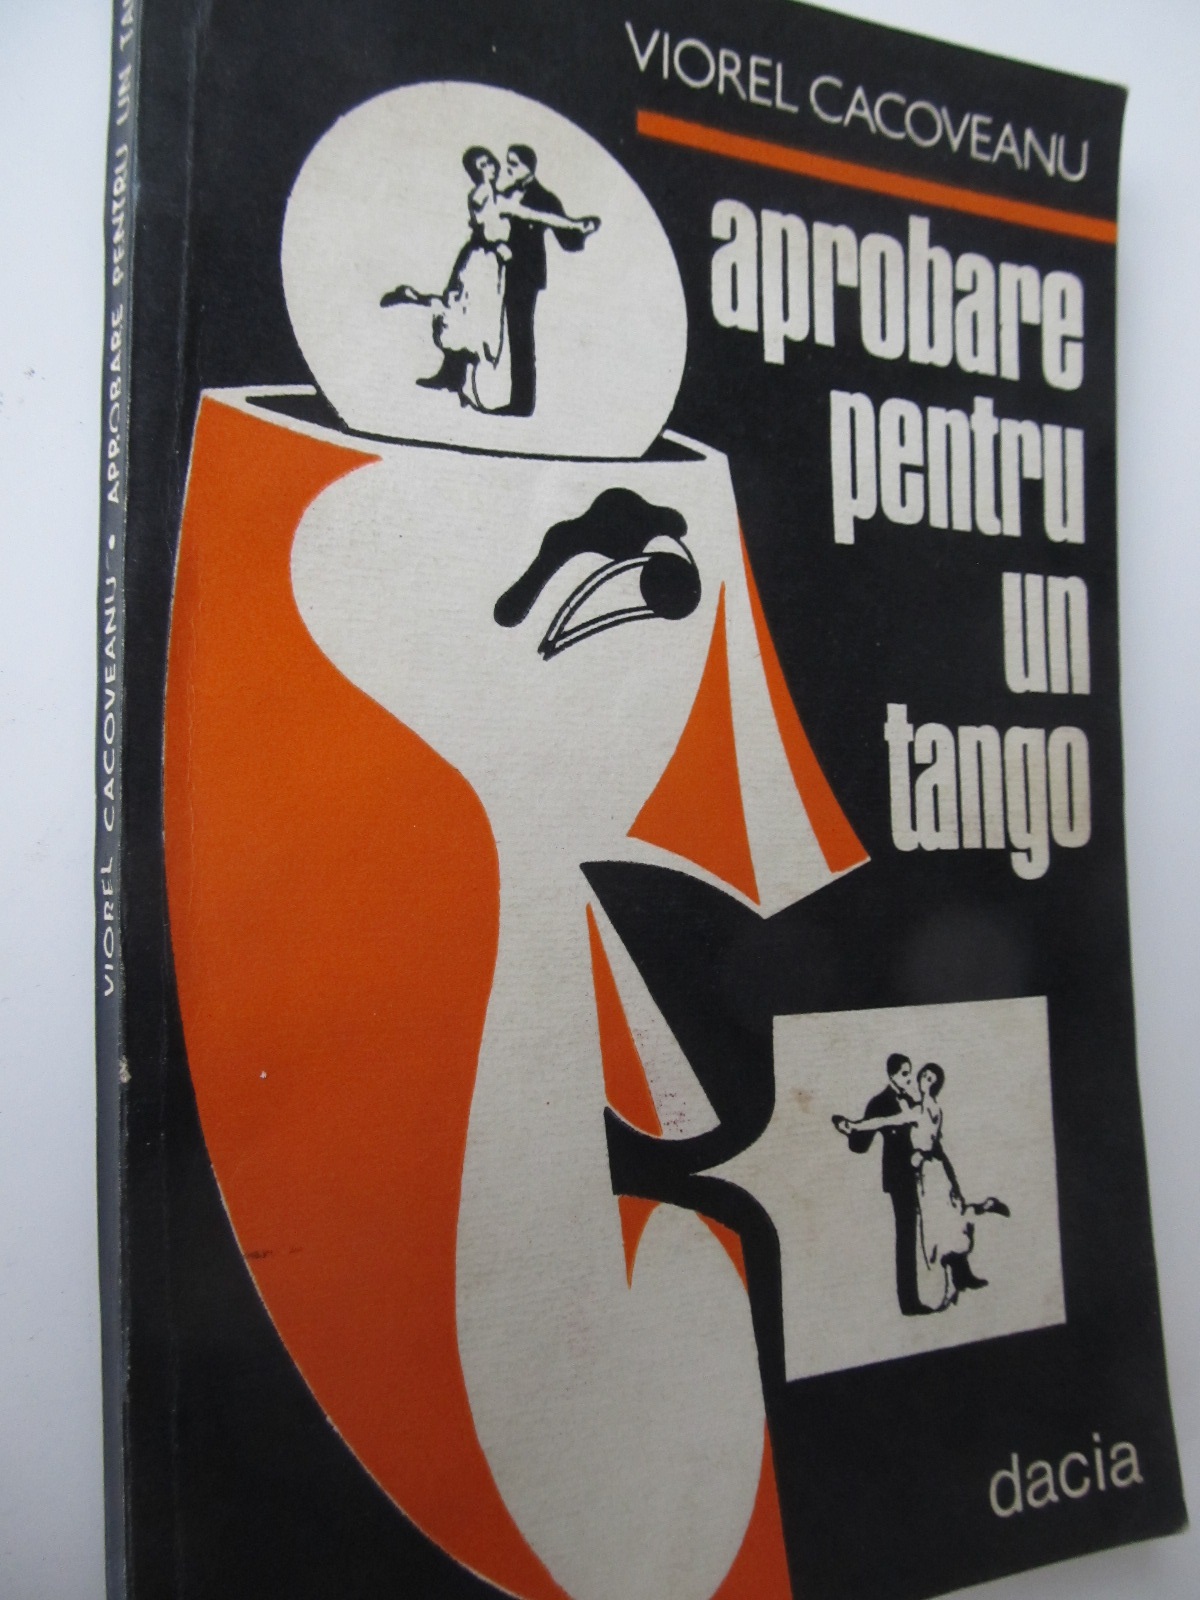 Aprobare pentru un tango - Viorel Cacoveanu | Detalii carte